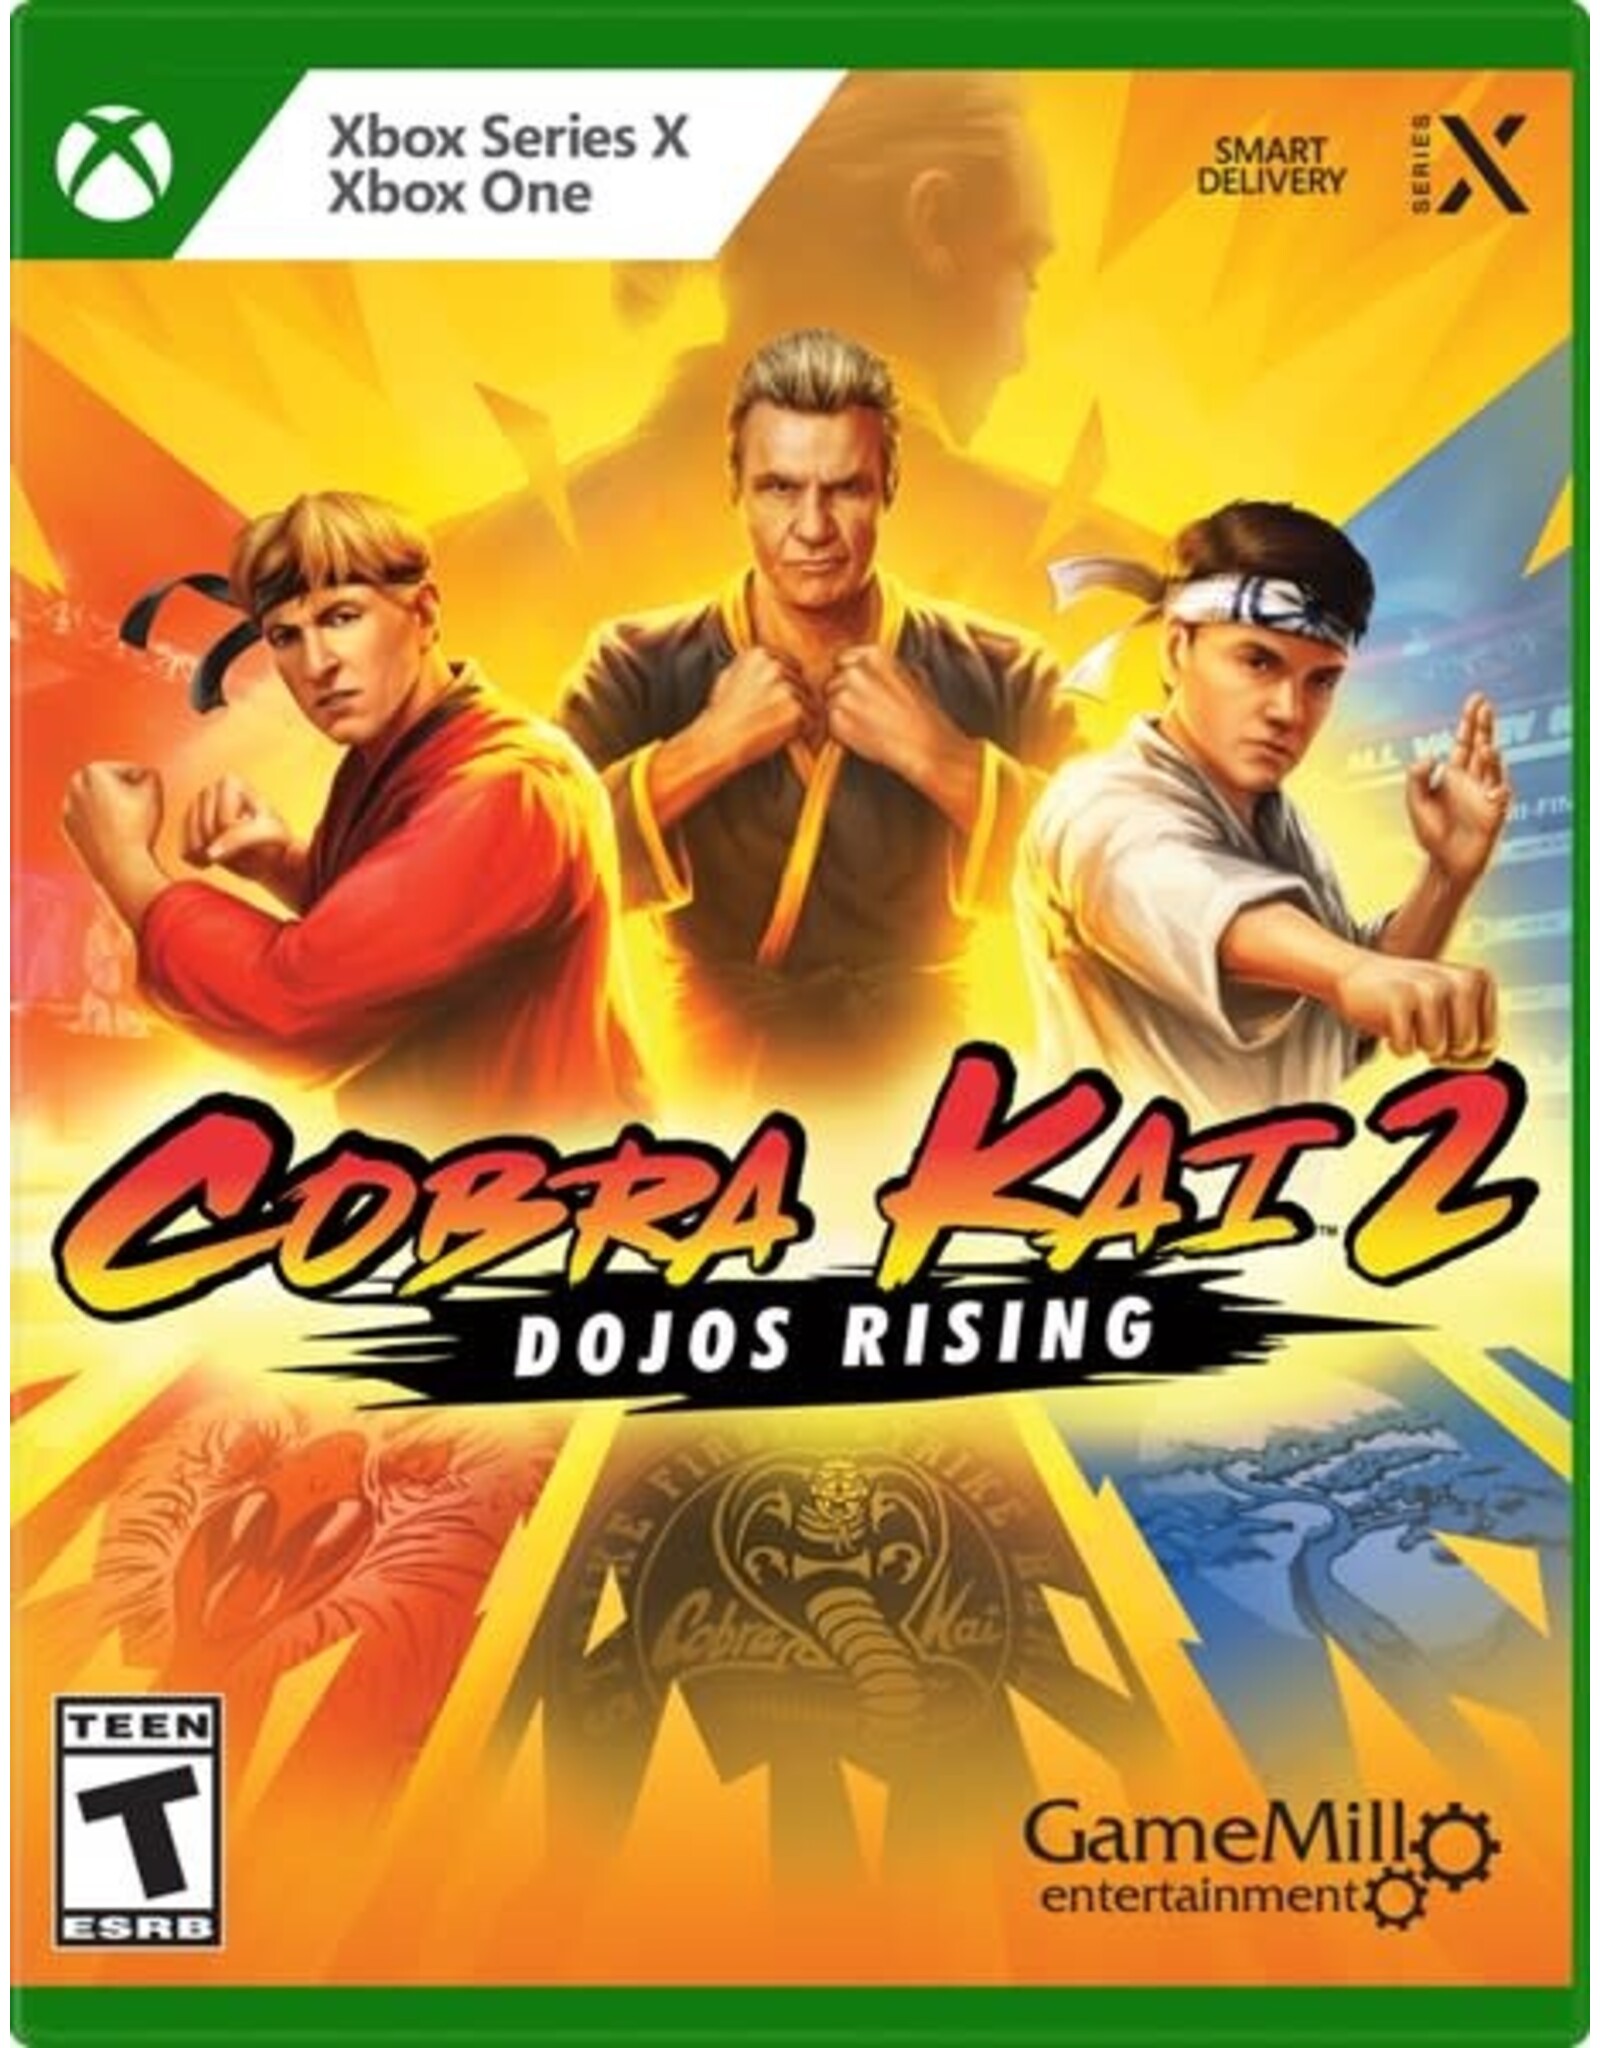 Xbox Series X Cobra Kai 2 Dojos Rising (CiB)